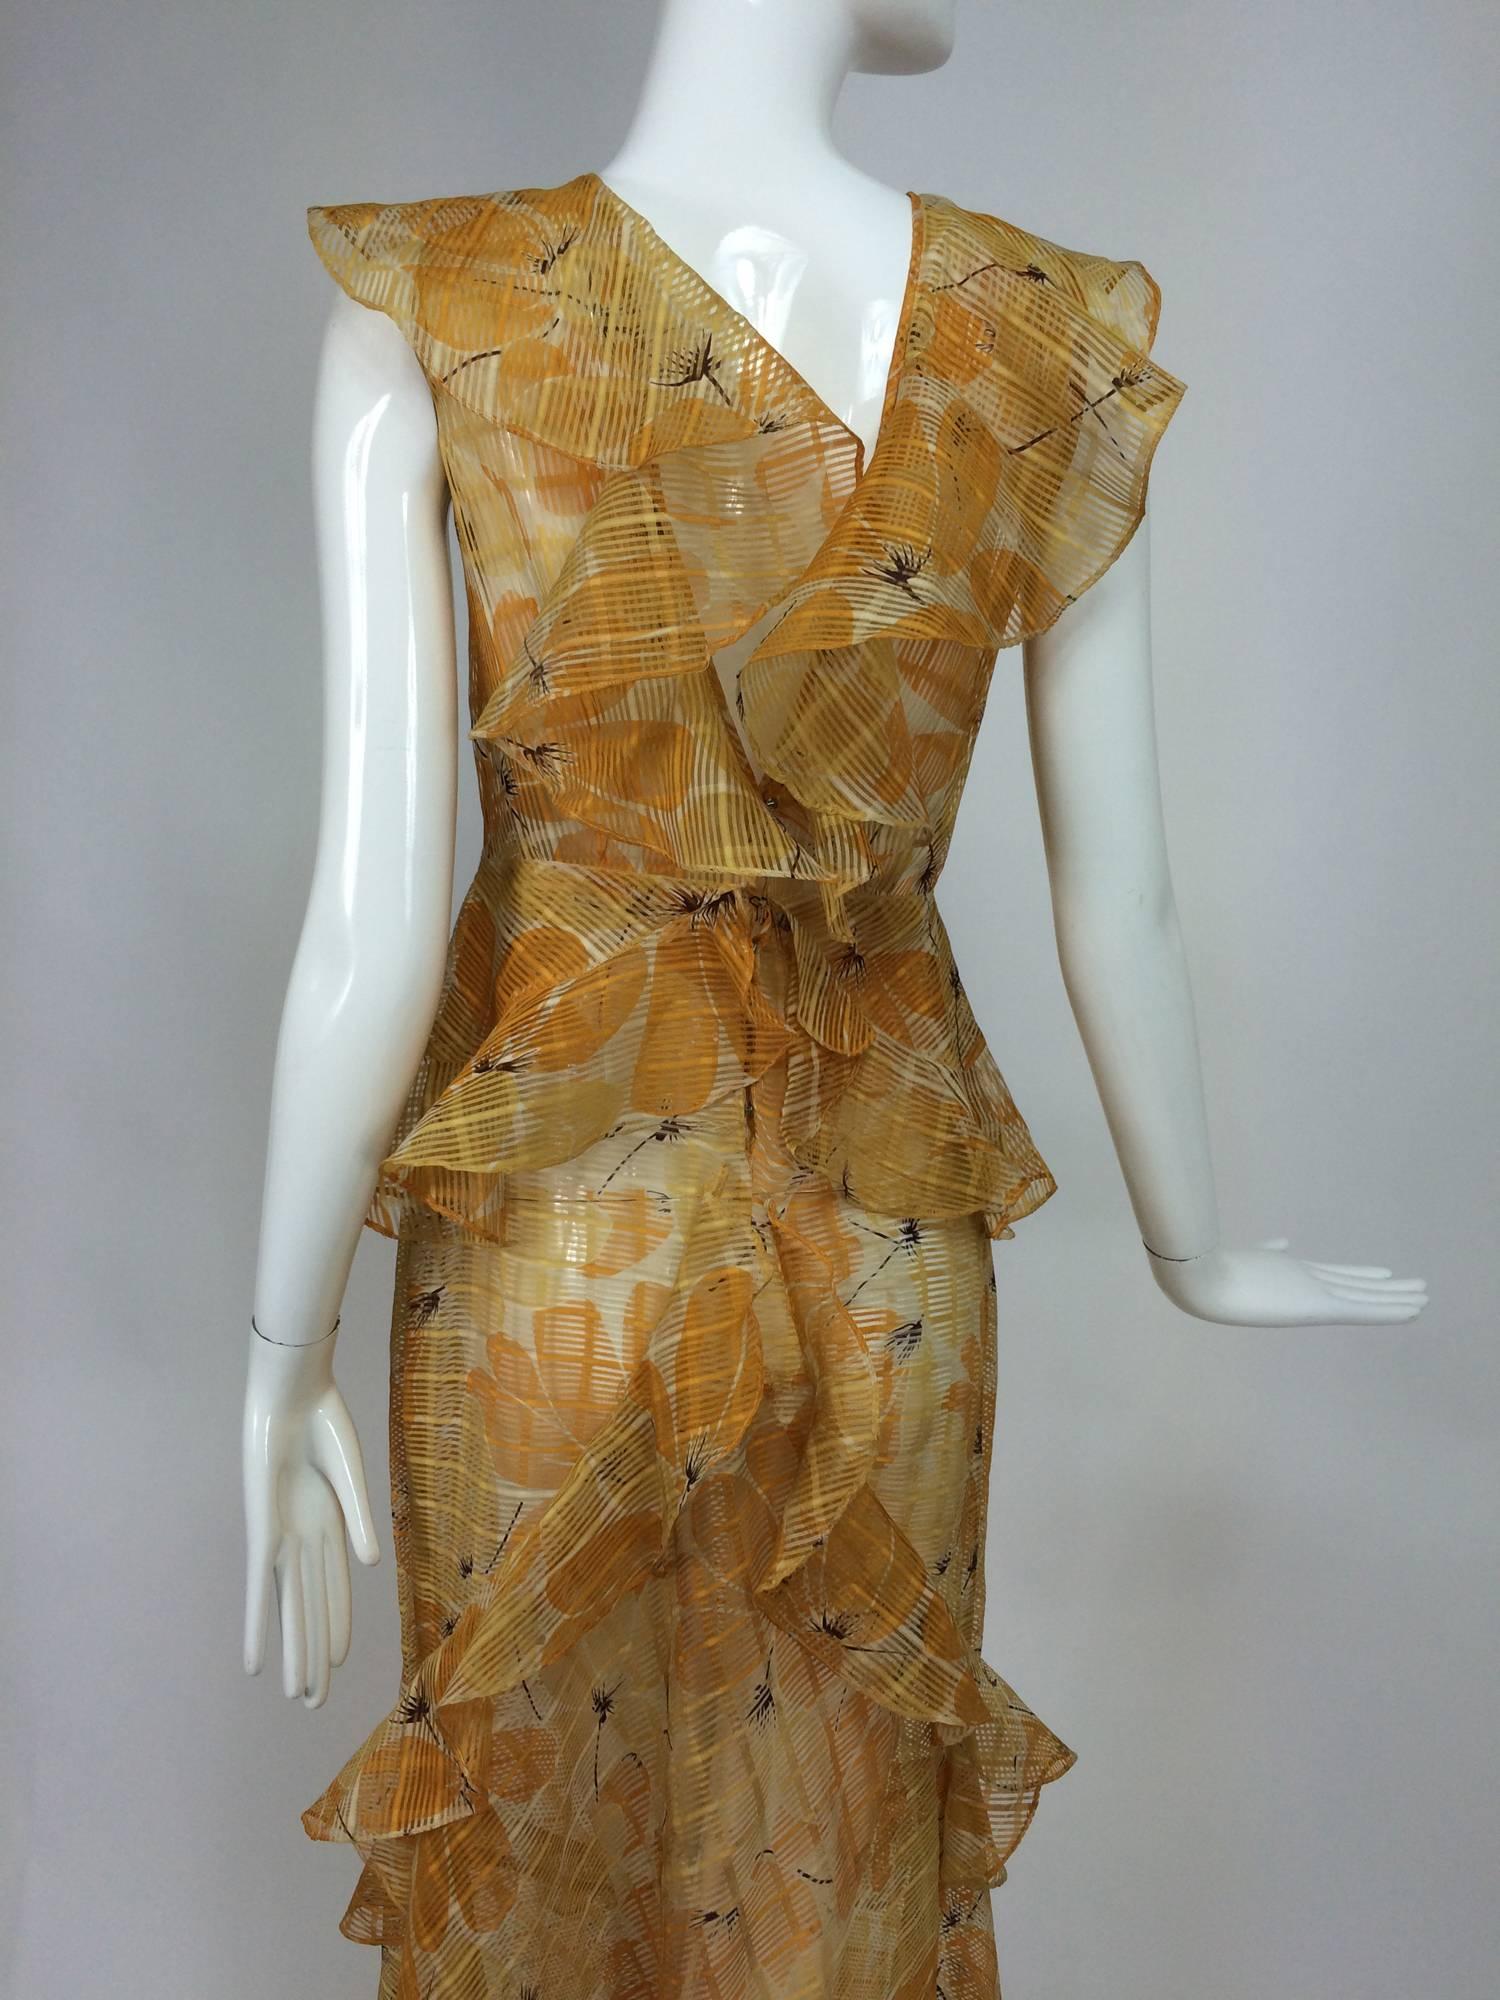 Sheer Woven Organdy ruffle daydress in floral cream & orange 1930s unworn 3